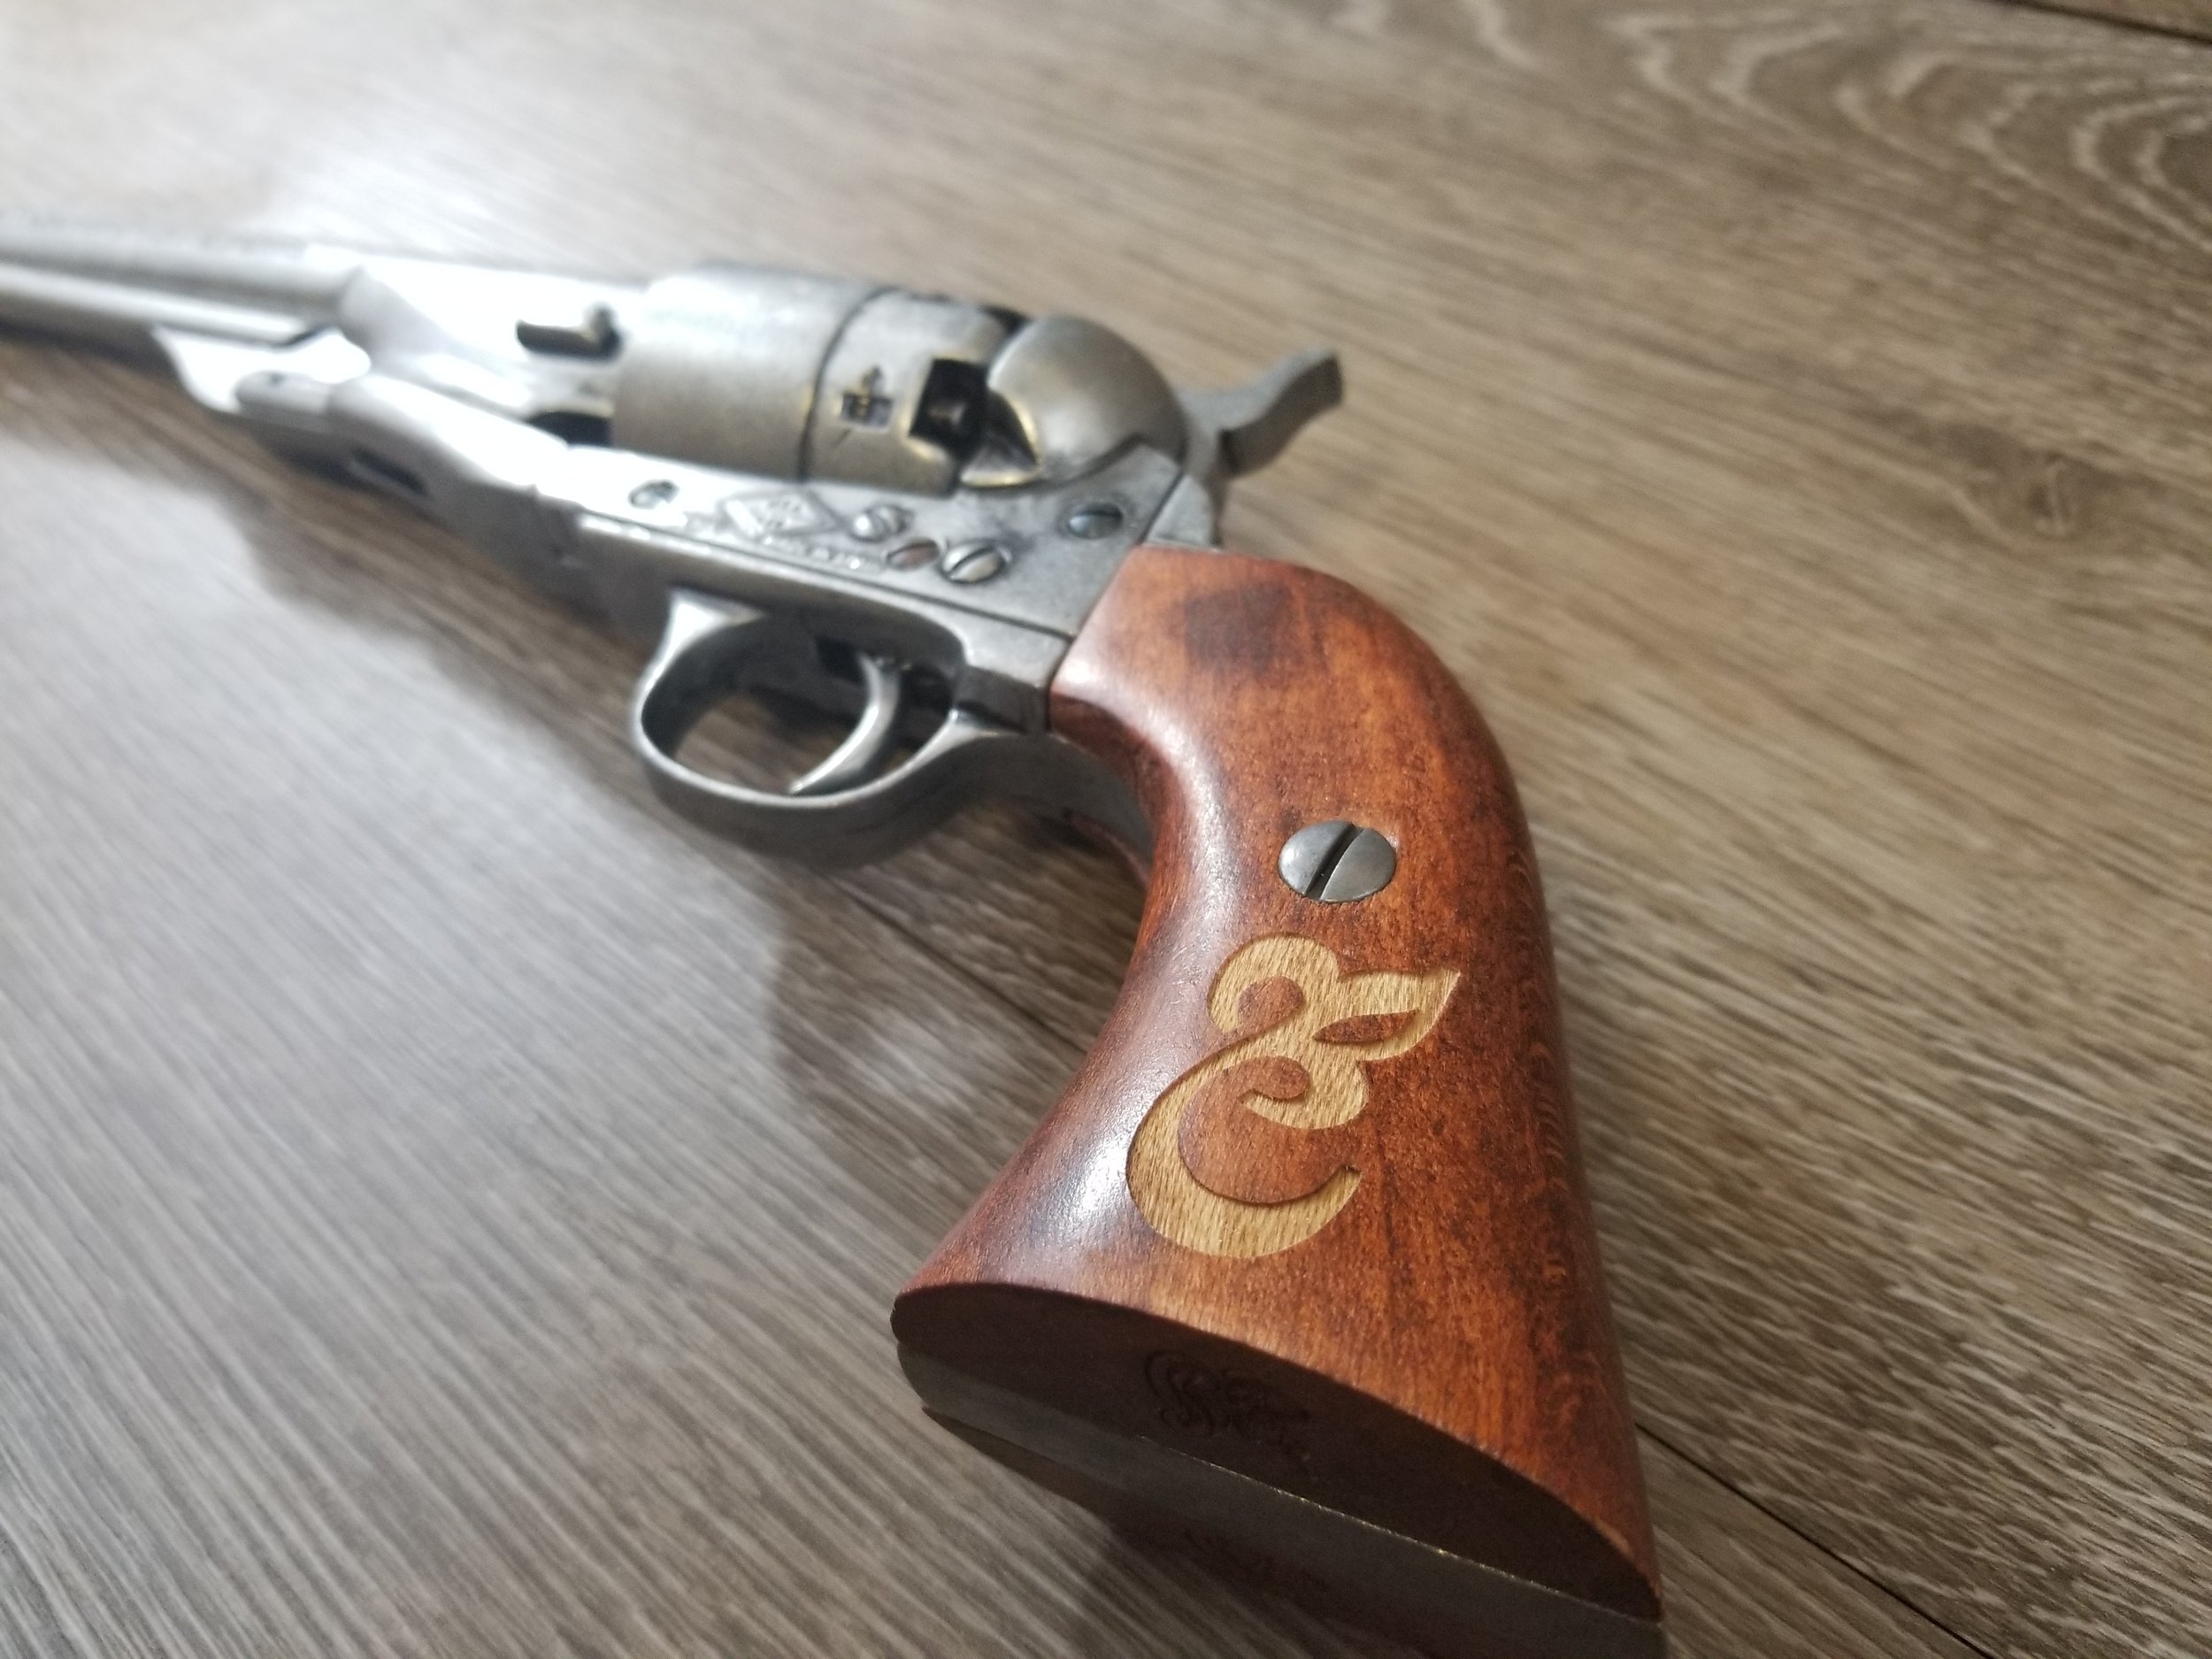 Copy of Custom Engraved Pistol Grip - Personalized Pistol Grip - Firearm Projects from Engrave It Houston